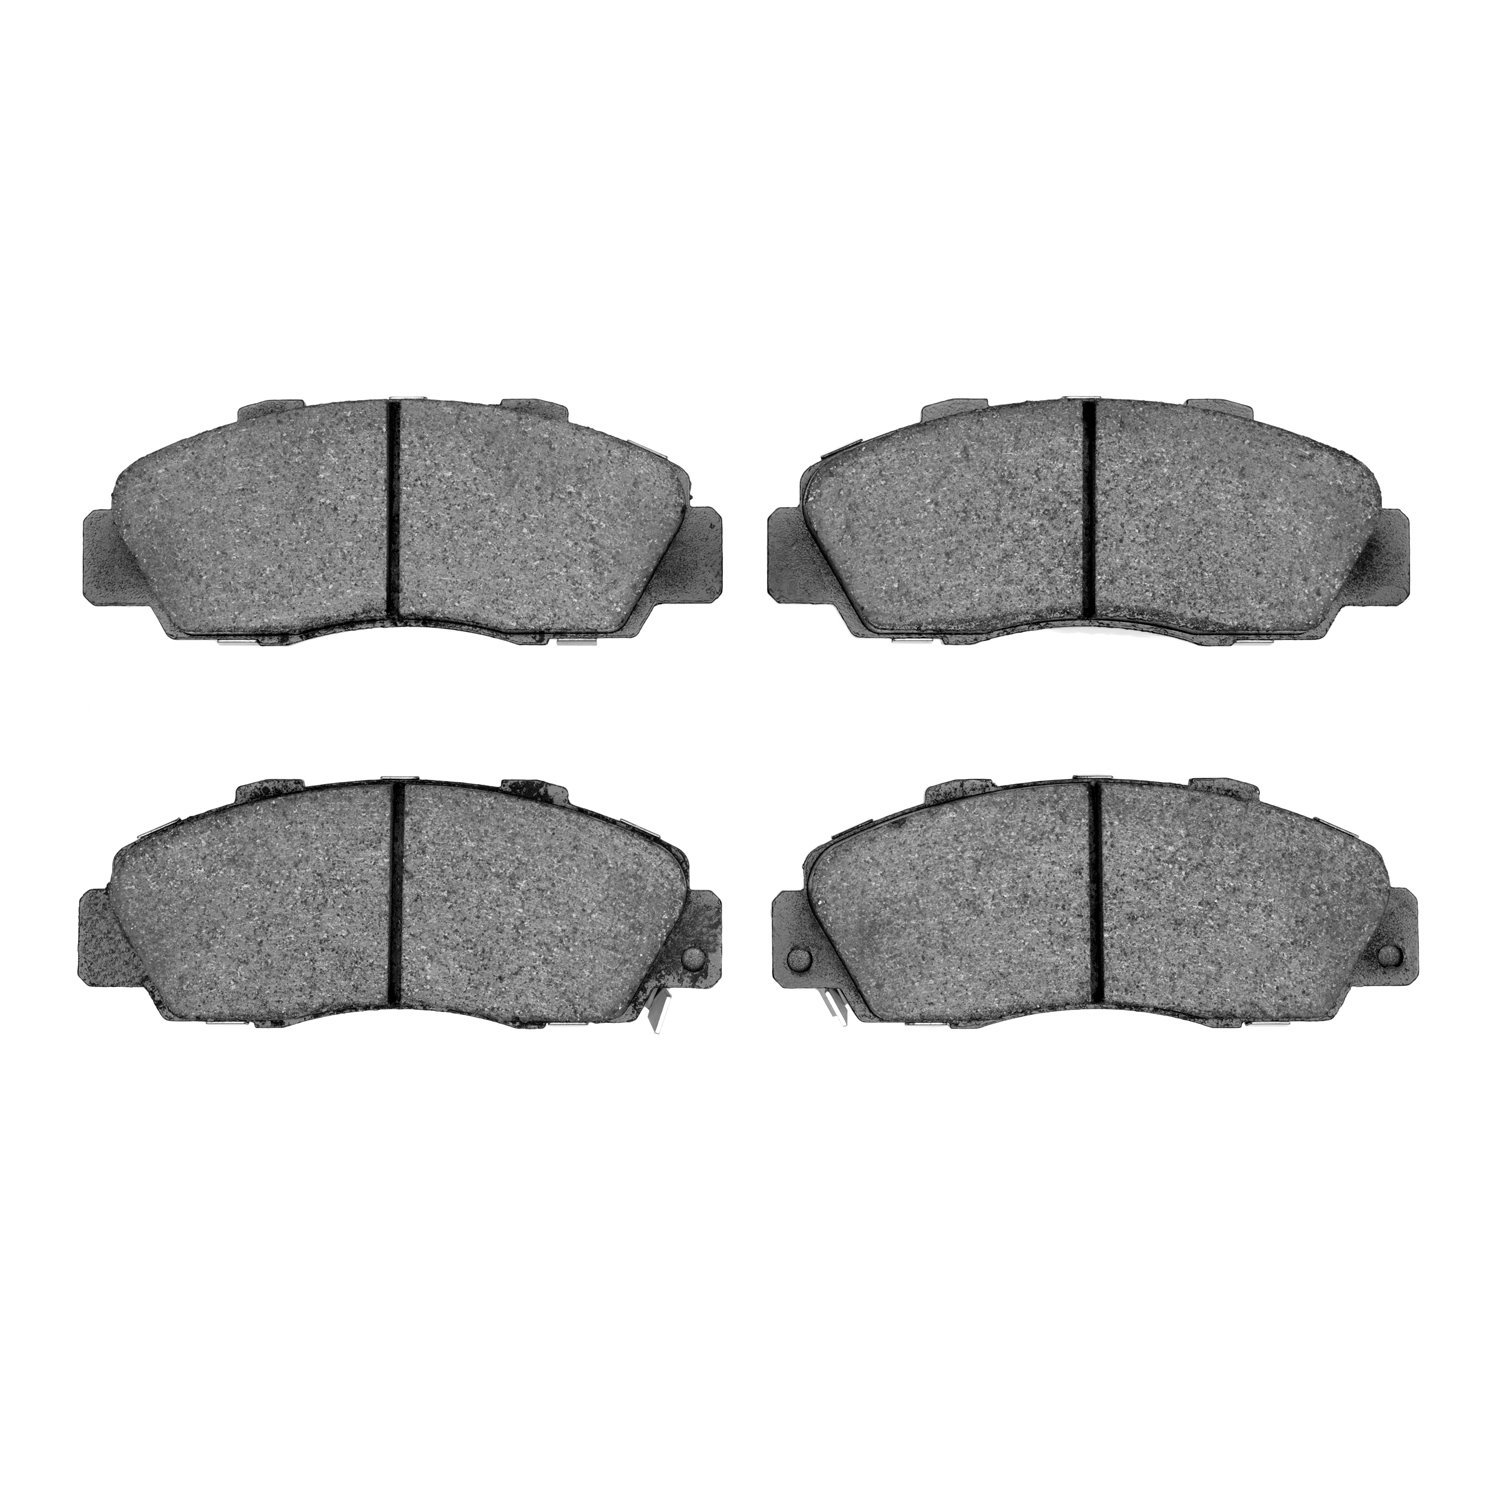 Semi-Metallic Brake Pads, 1991-2005 Fits Multiple Makes/Models, Position: Front